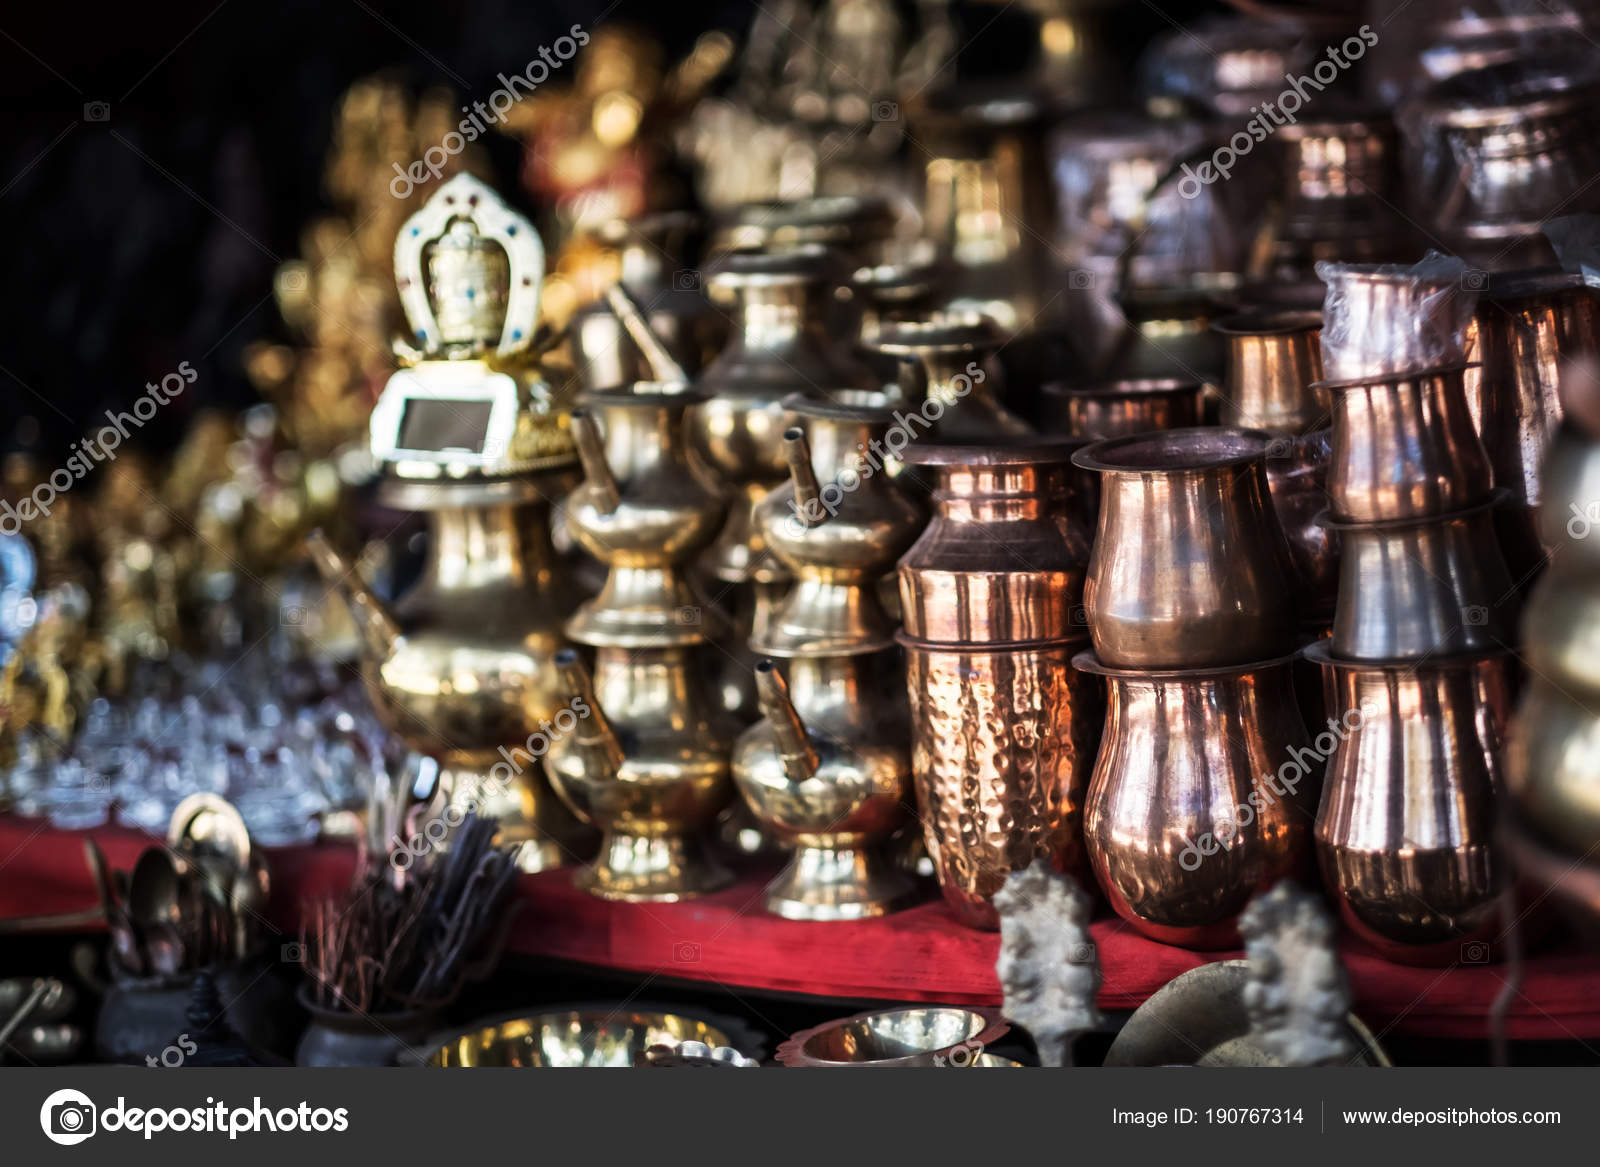 https://st3.depositphotos.com/1040166/19076/i/1600/depositphotos_190767314-stock-photo-brass-utensils-shop-kathmandu-market.jpg